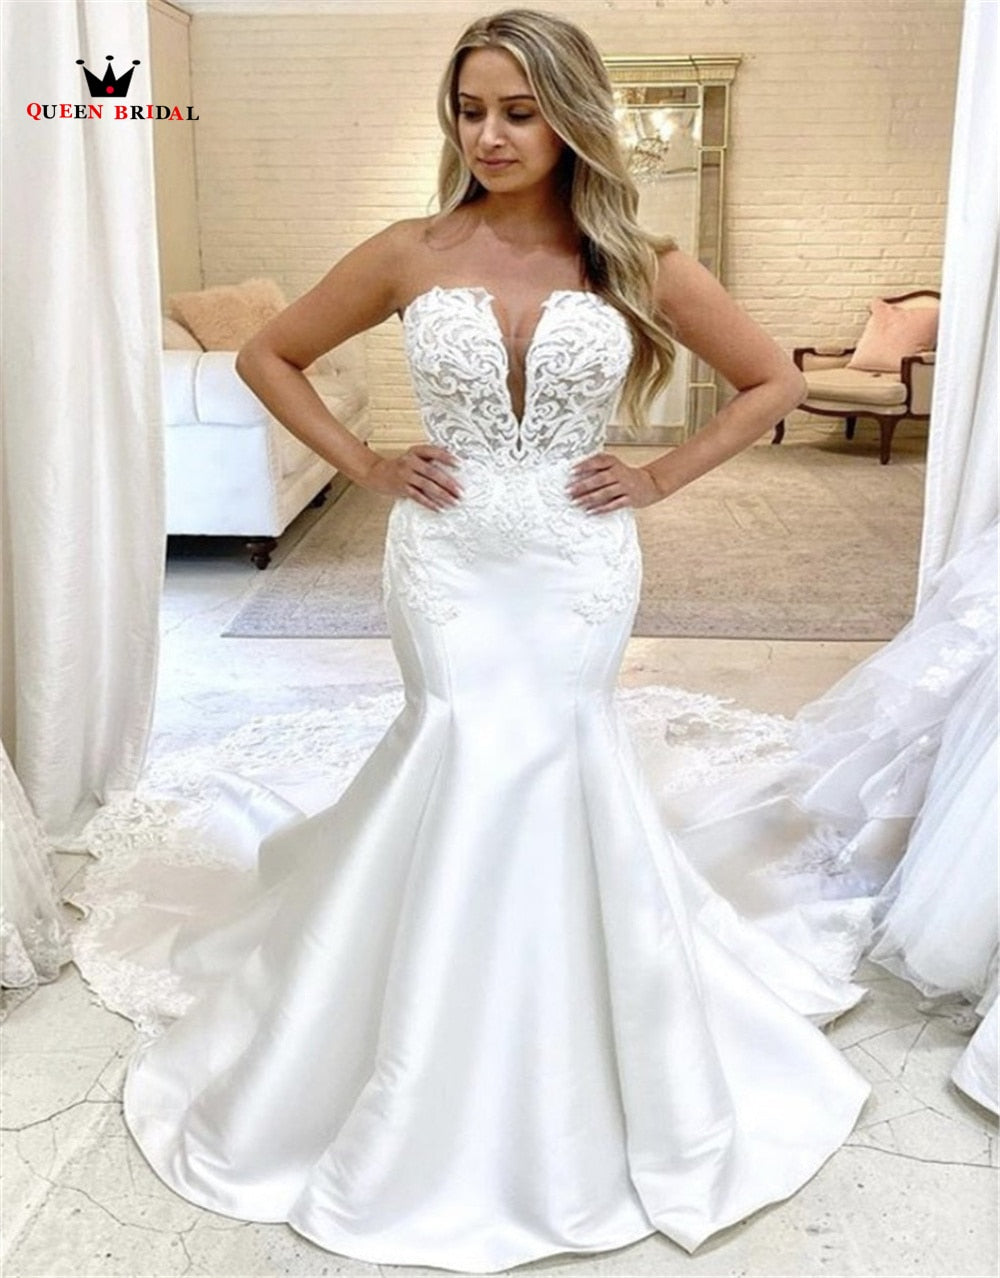 20 Wedding Dresses Under $1,500 | Unique Bridal Gowns Under 1500 Dollars